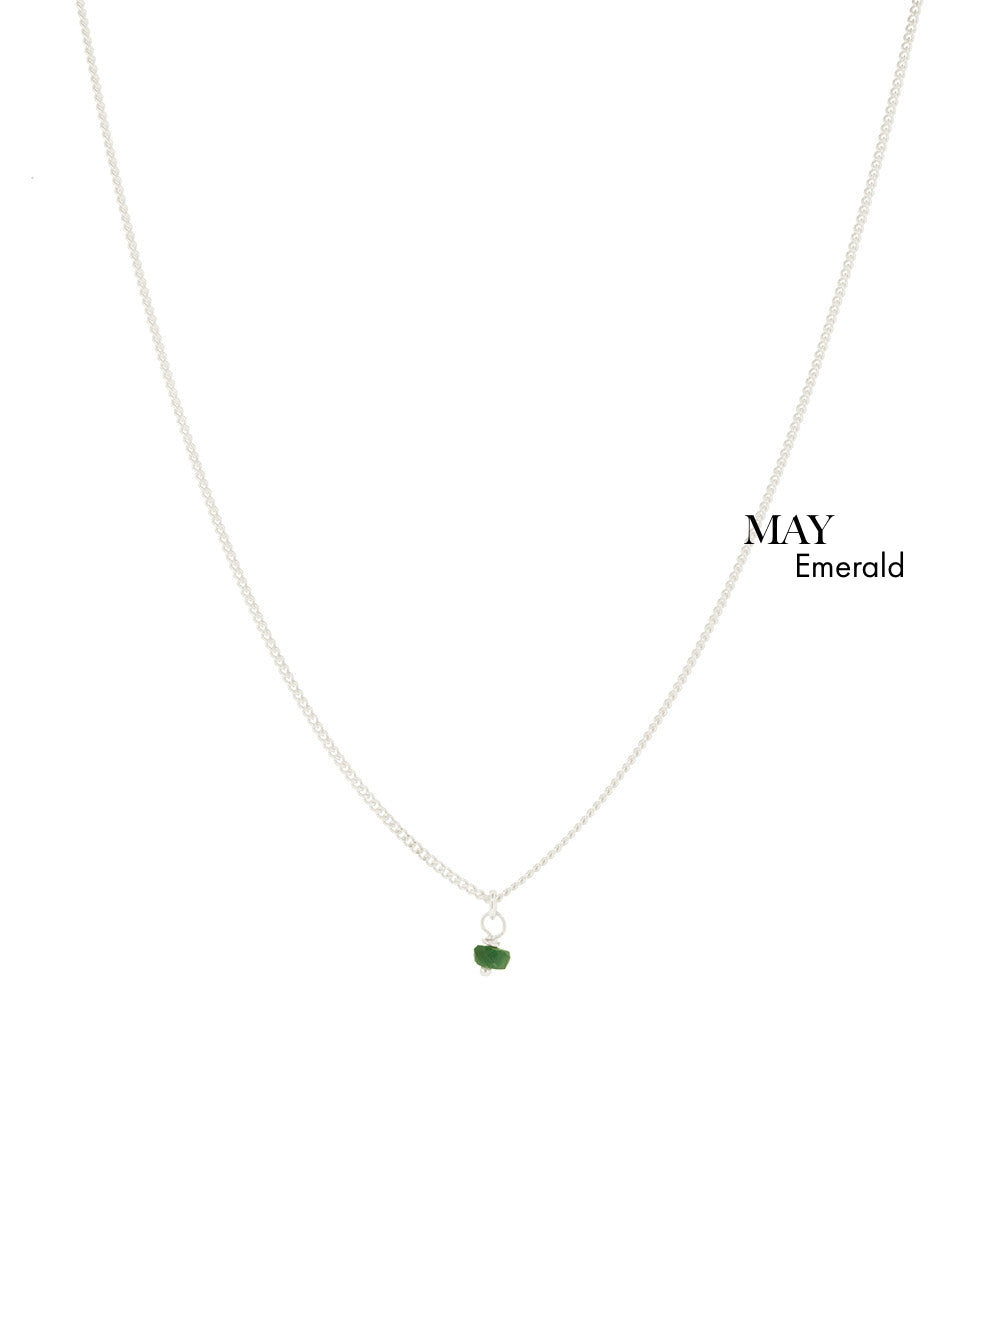 Birthstone May - Emerald | 925 Sterling Silver